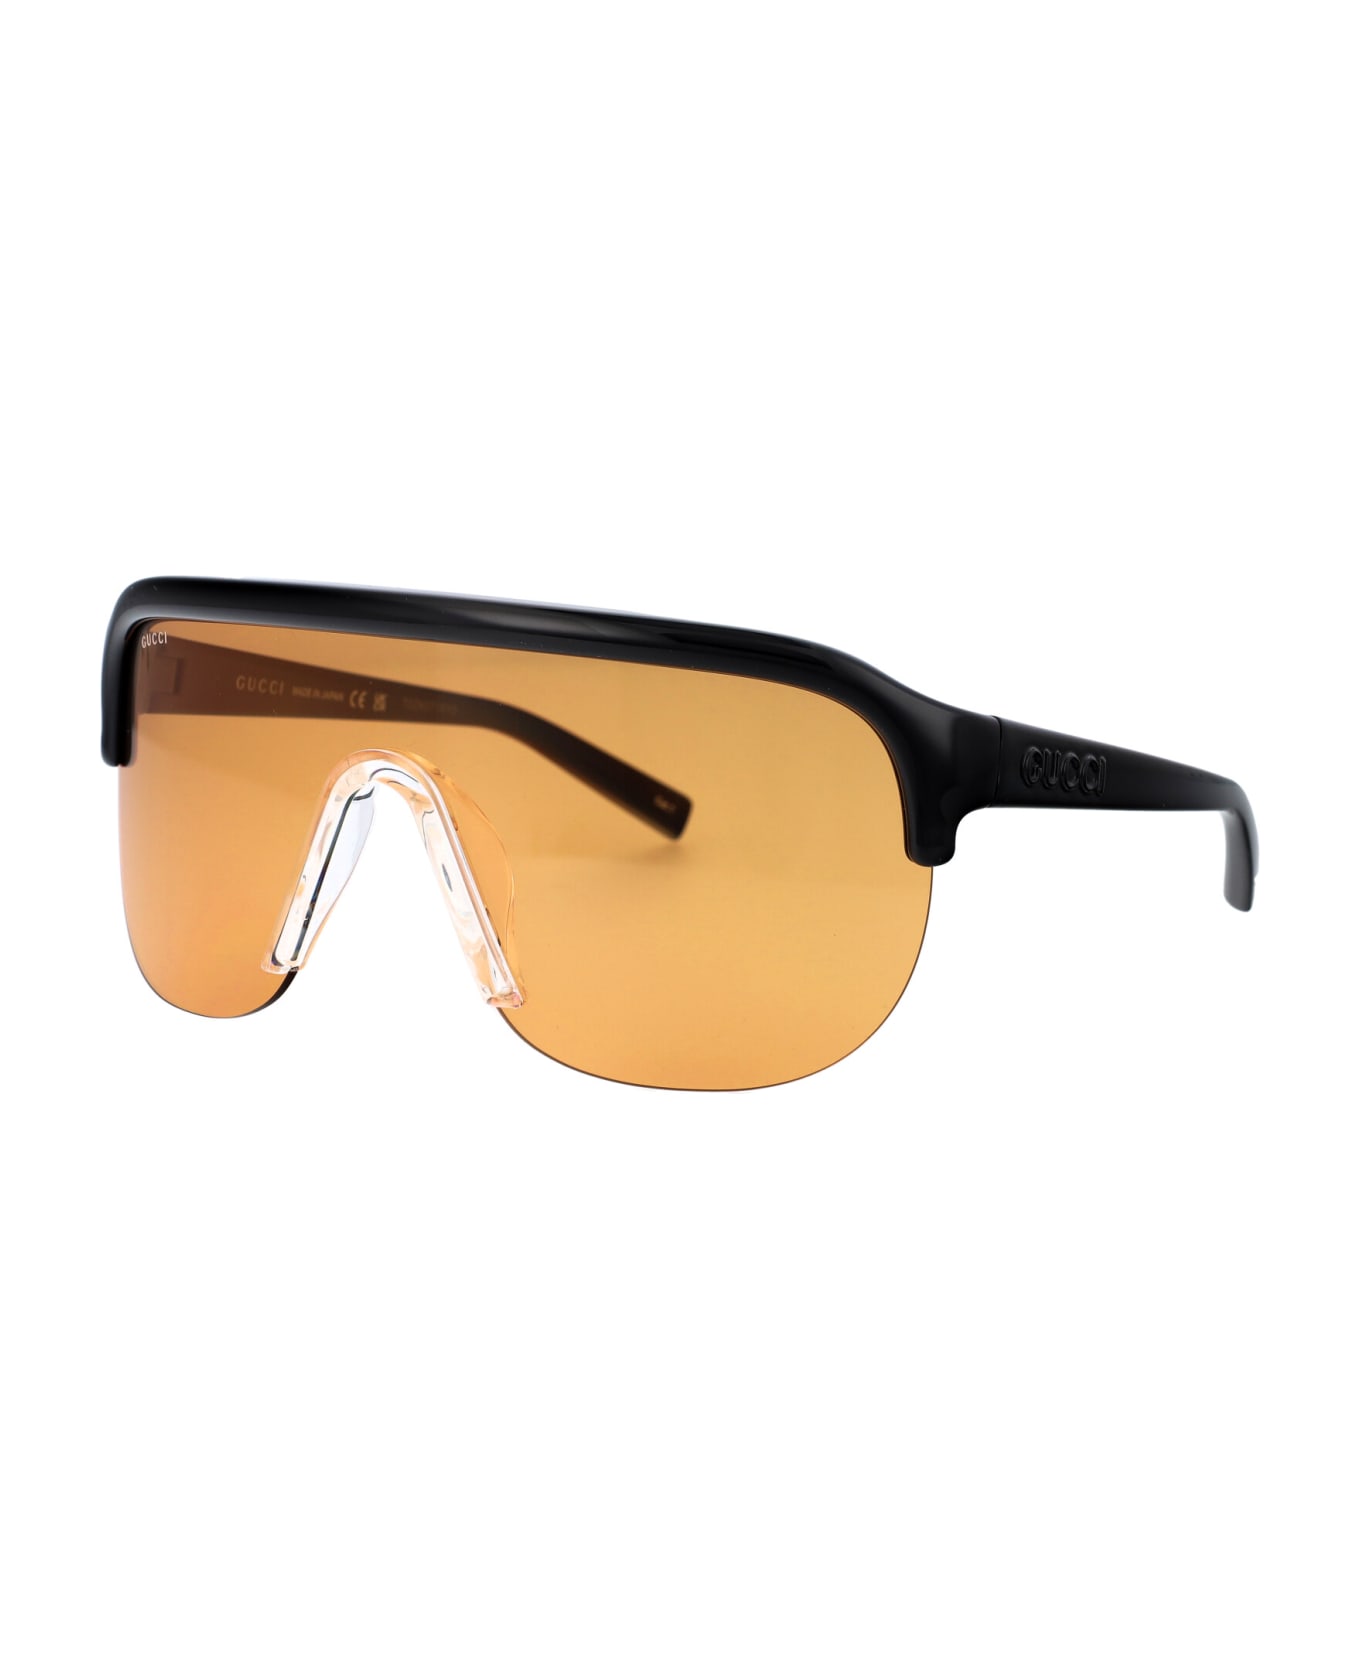 Gucci Eyewear Gg1645s Sunglasses - 005 BLACK BLACK ORANGE